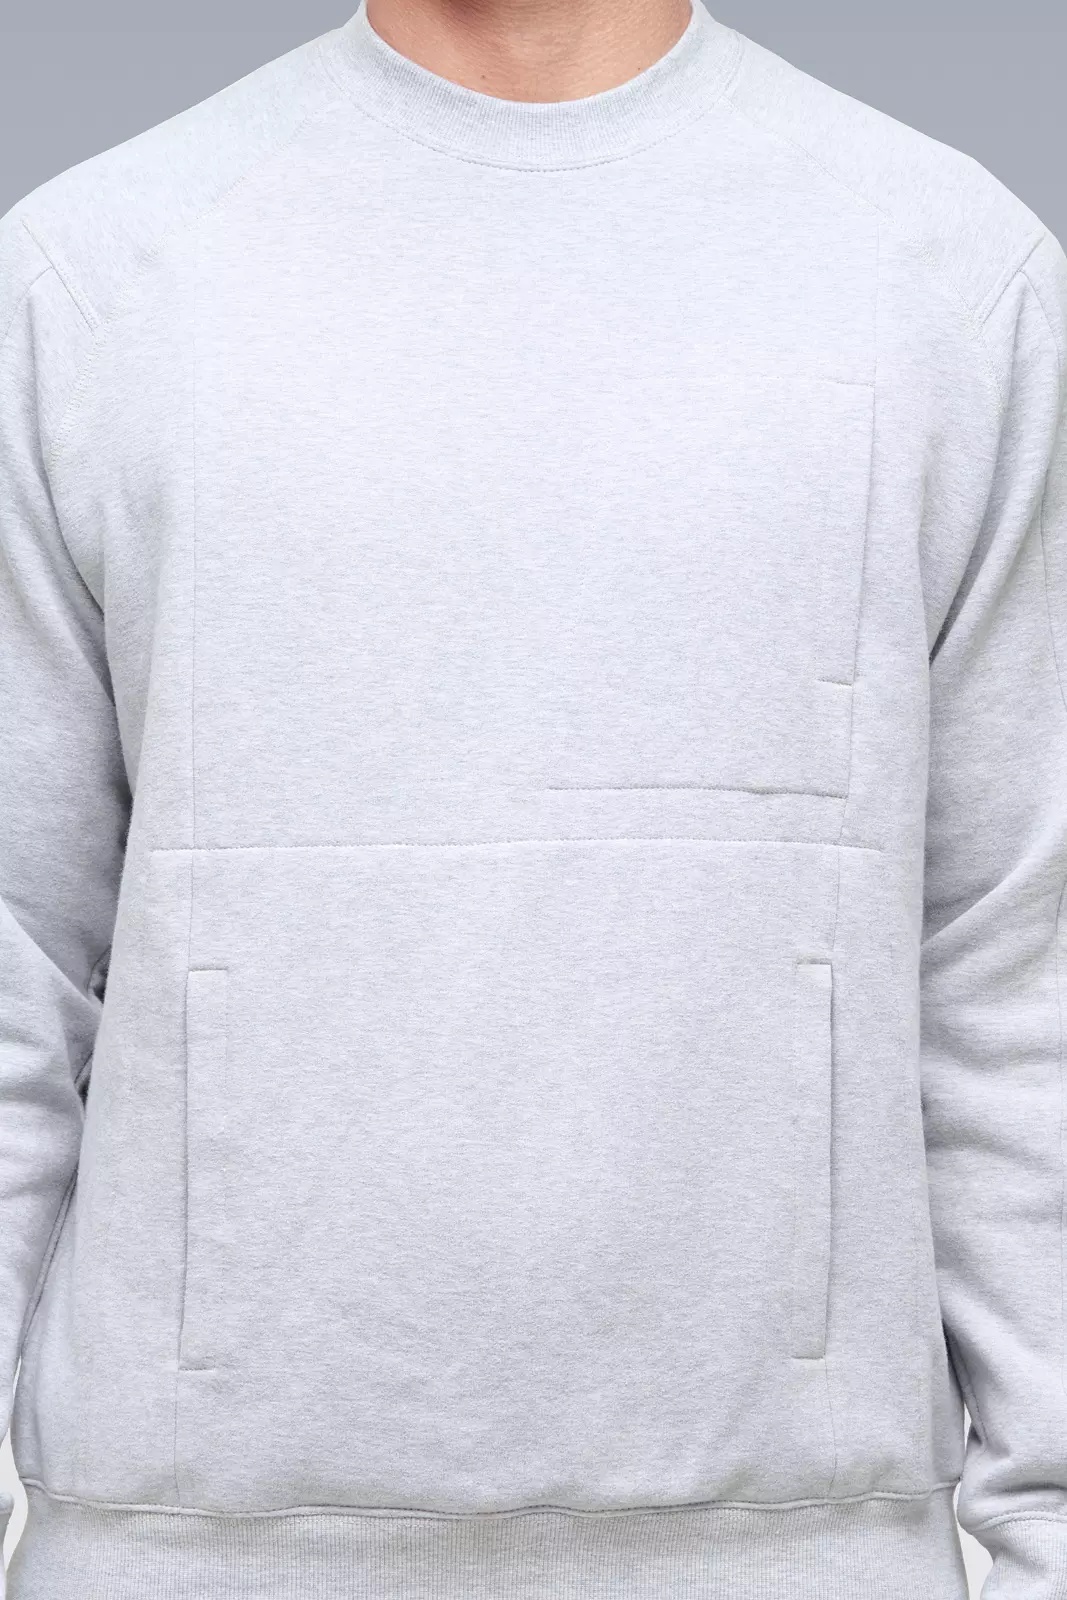 S14-BR Cotton Crewneck Sweatshirt Gray Melange - 7